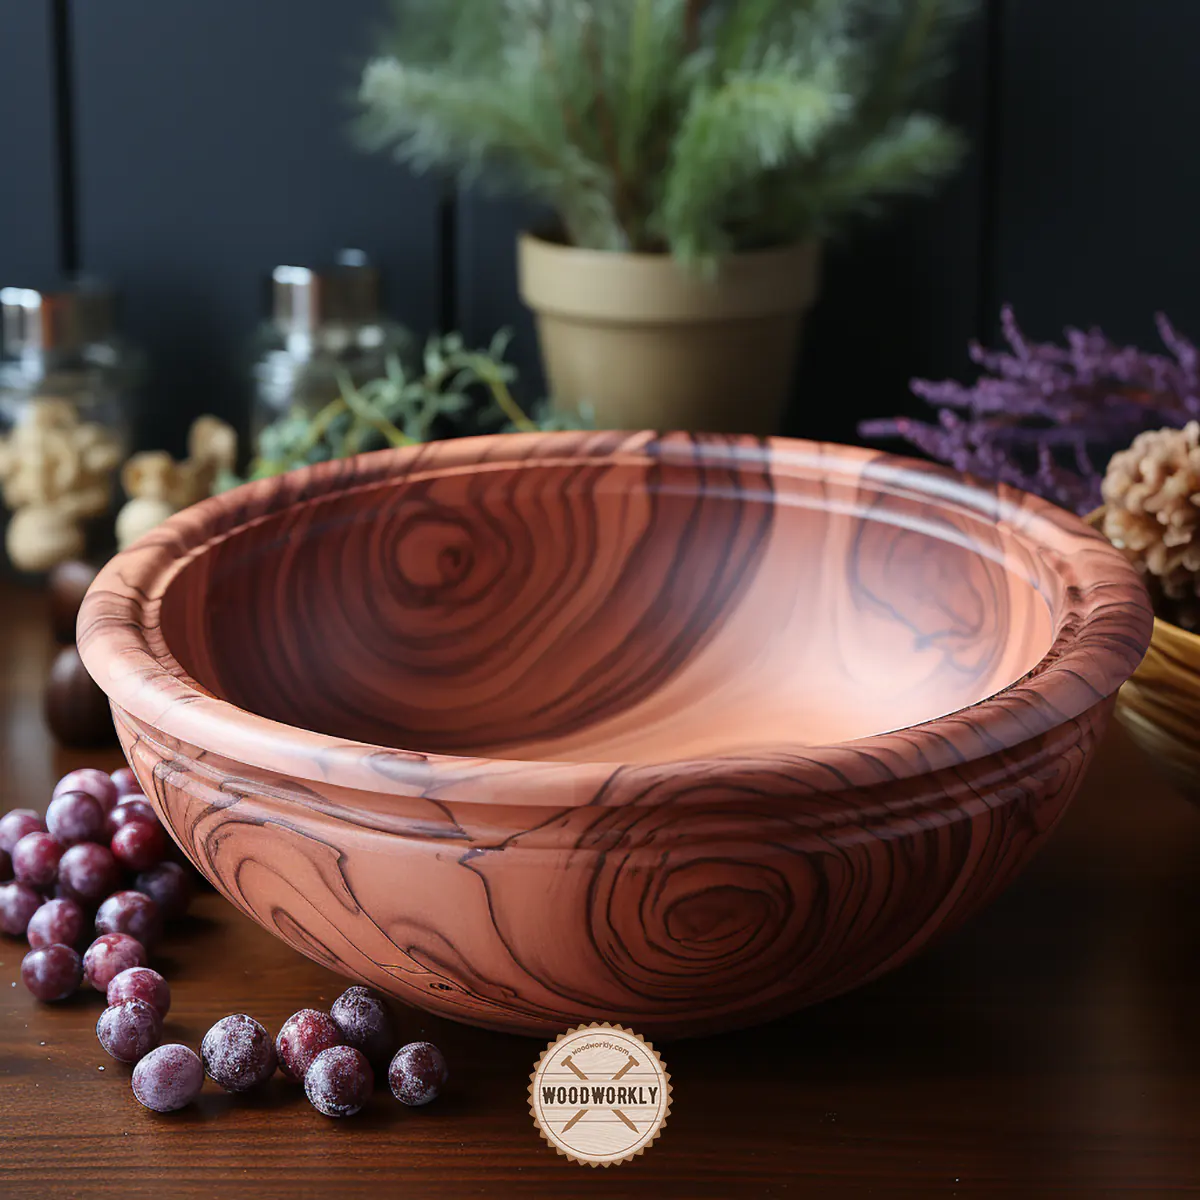 Cedar wood kitchen bowl